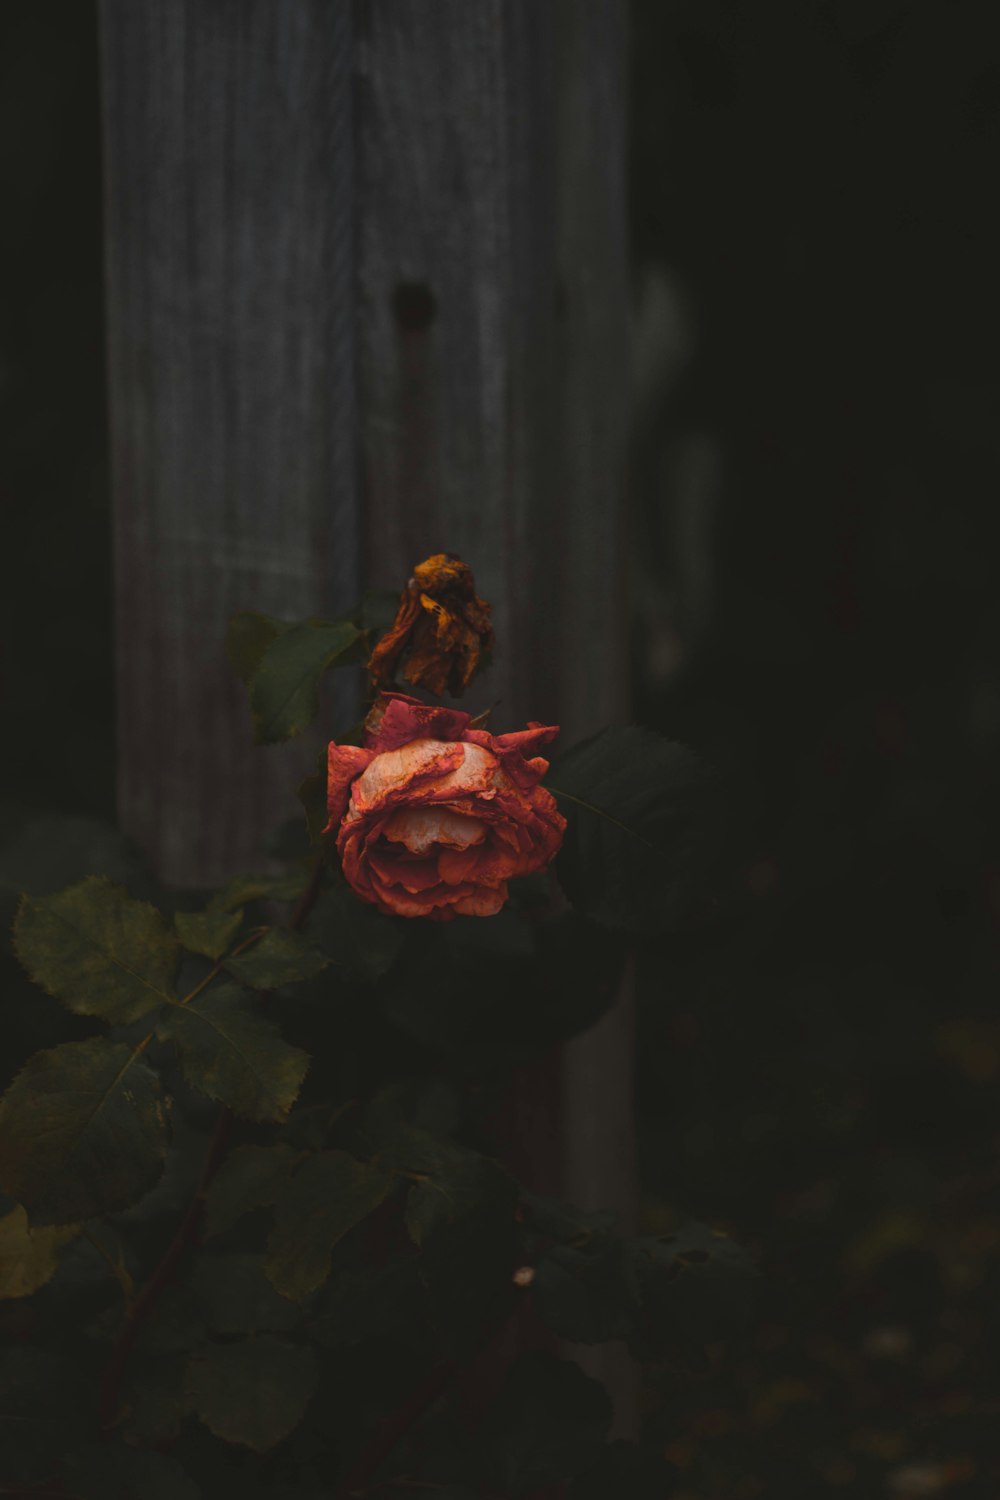 Fotografia a fuoco superficiale di rose rosse